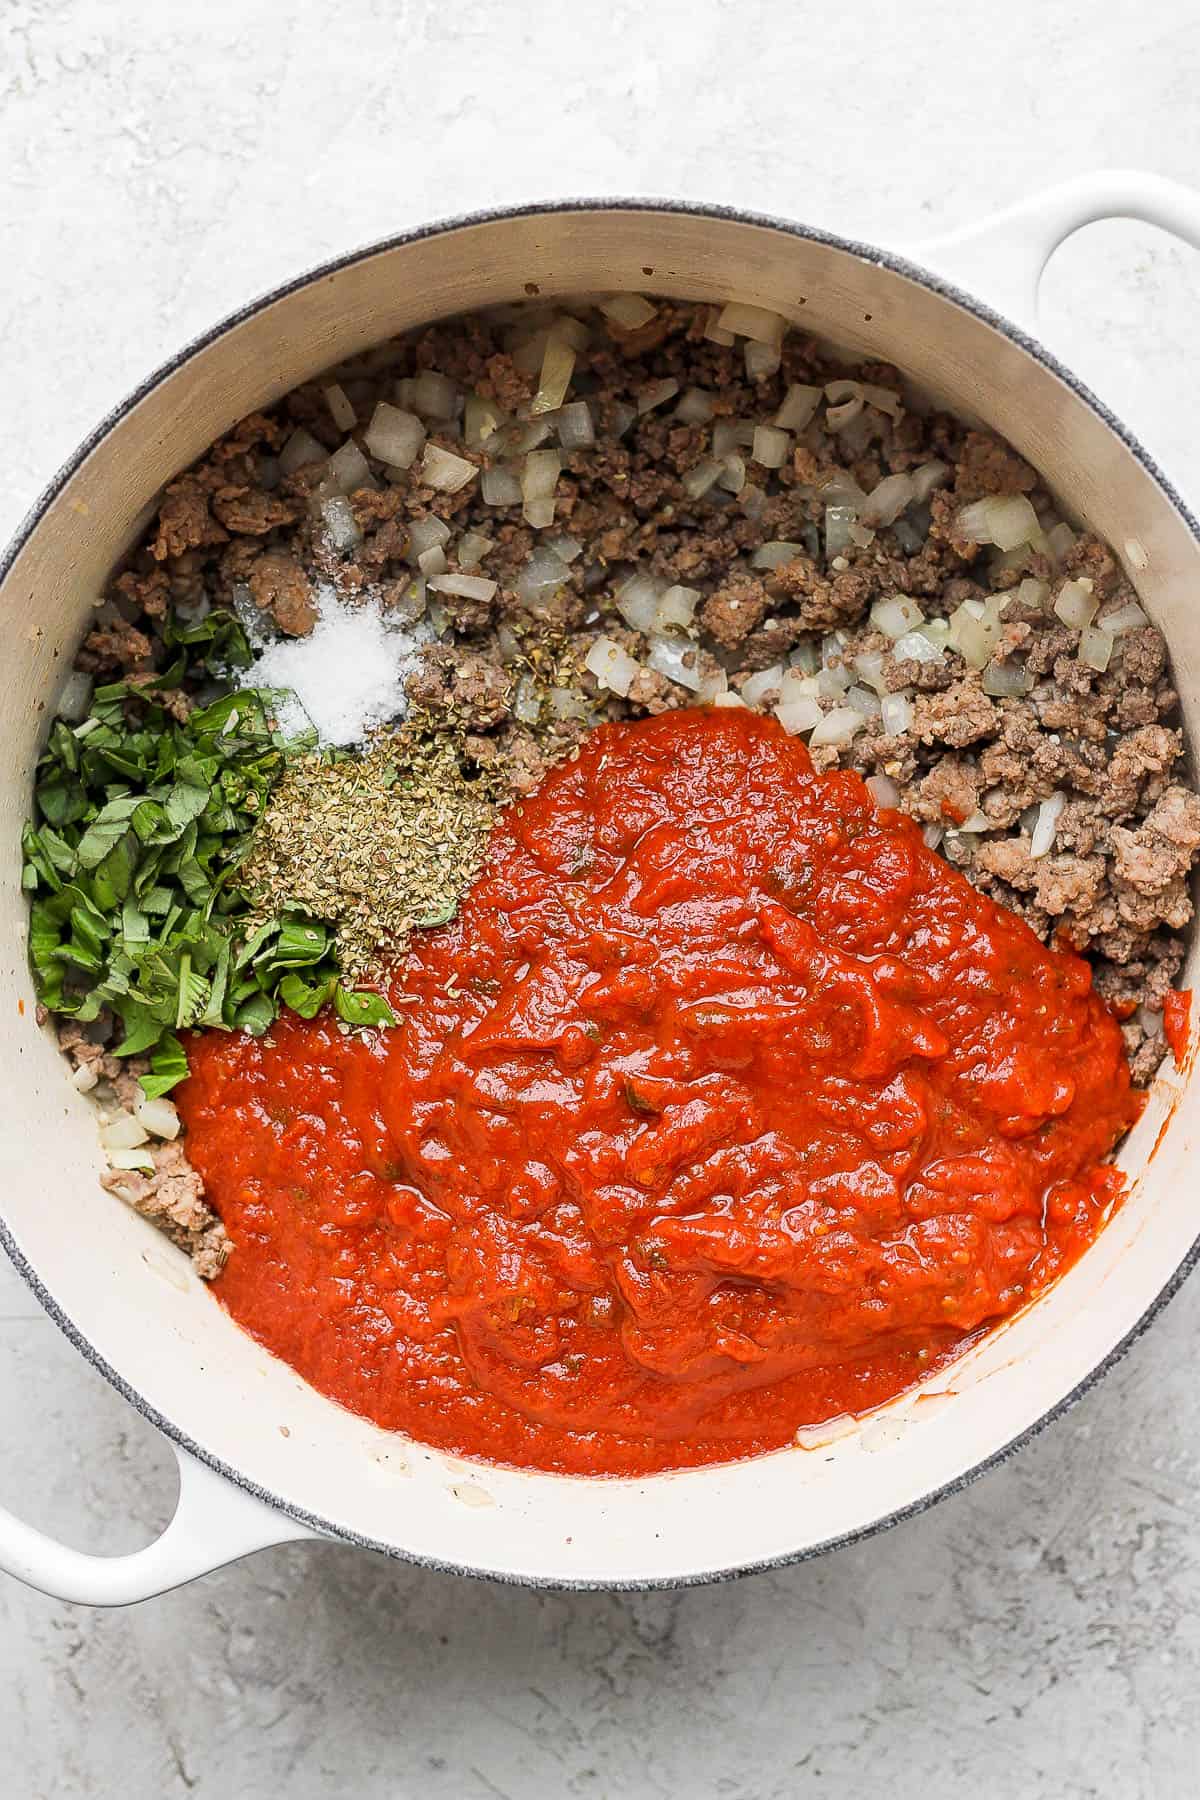 Marinara sauce, oregano, basil, salt, and pepper added to the pot.